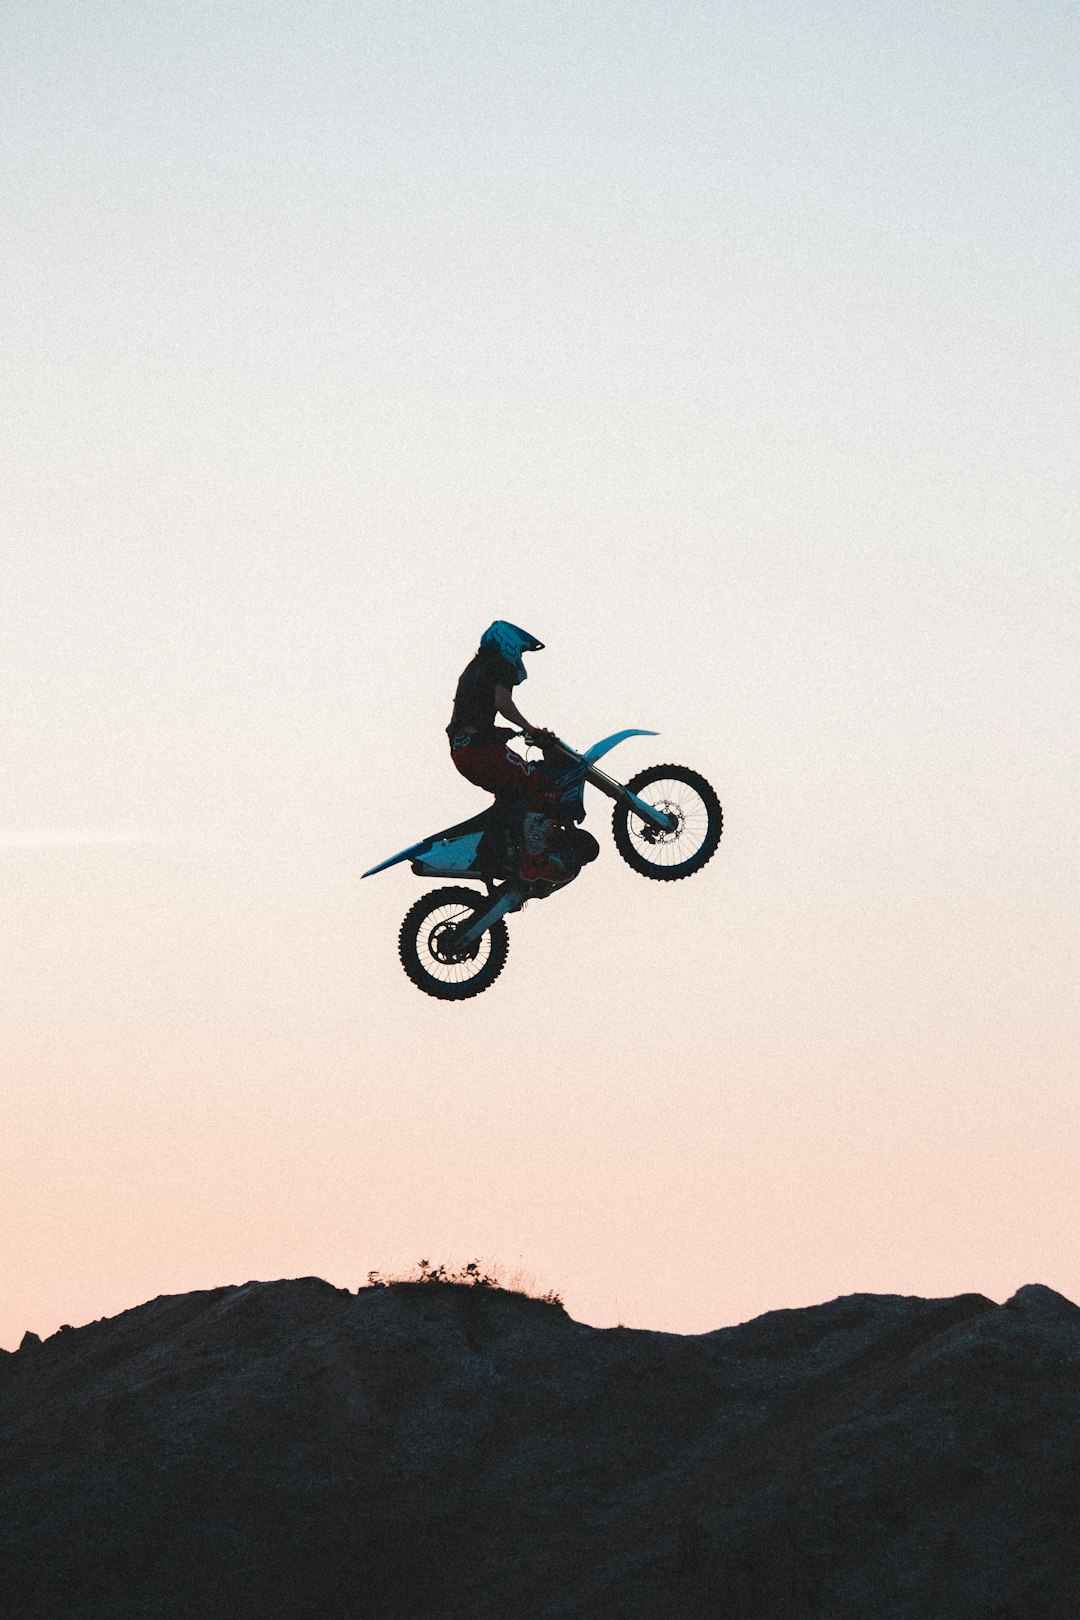 man riding motocross dirt bike on mid air during daytime